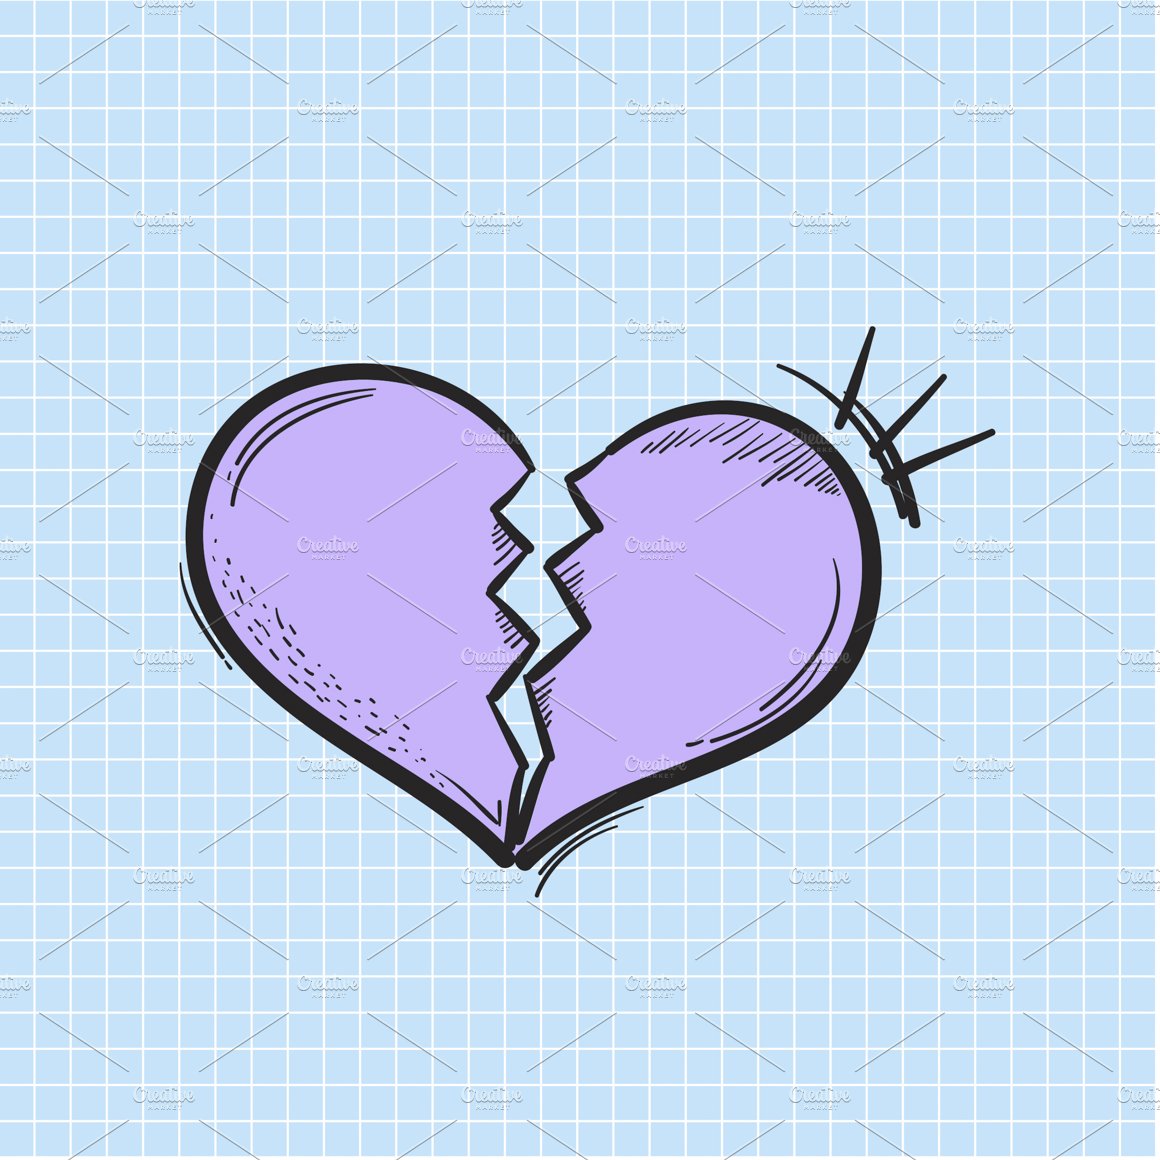 broken heart icon